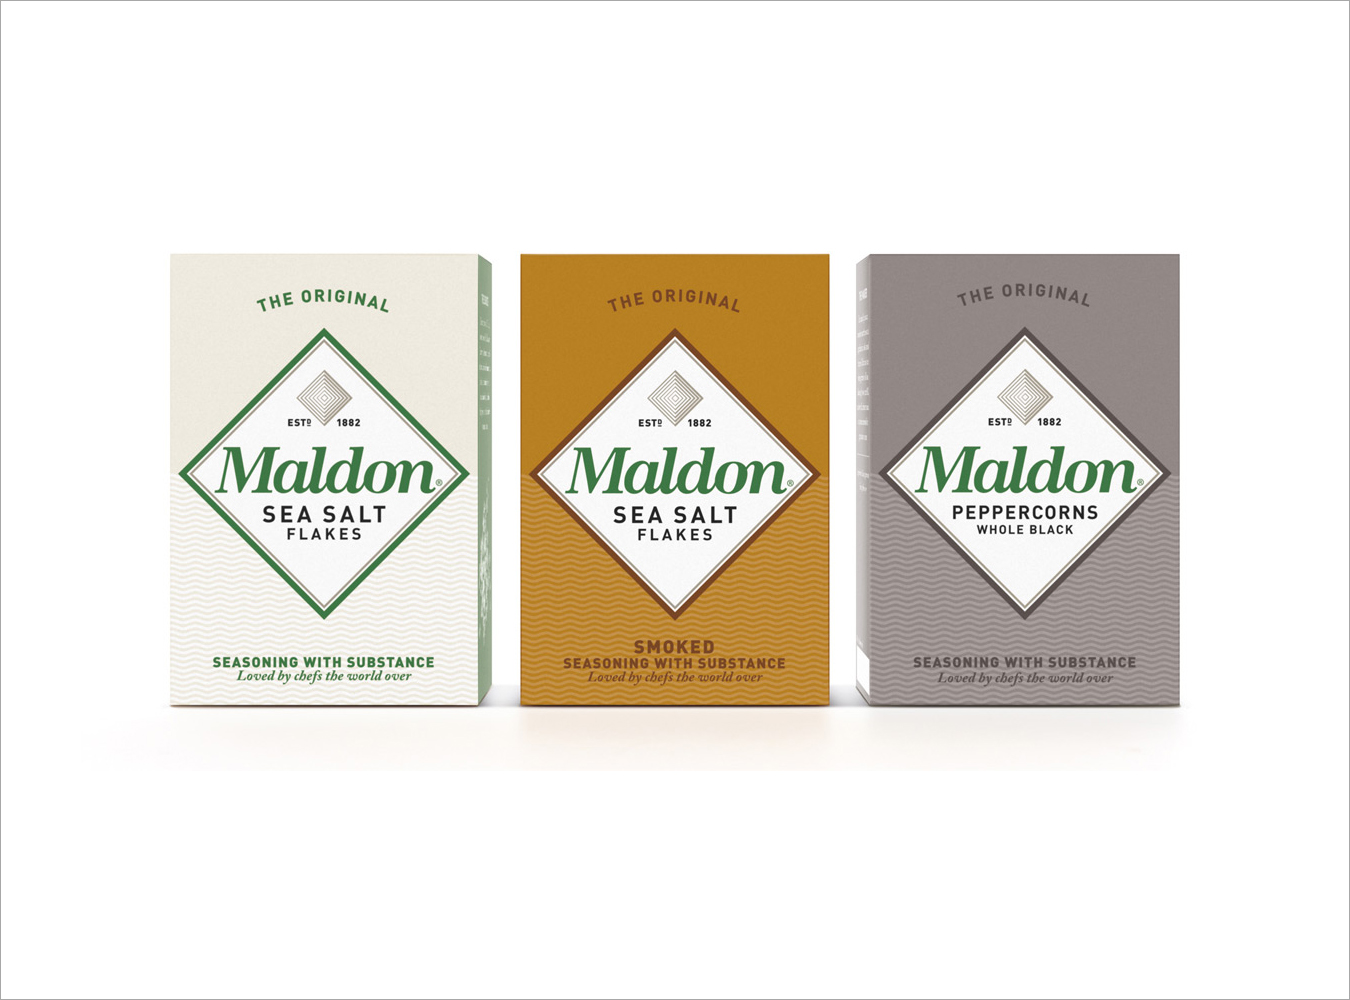 Maldon Salt - Branding and packaging design by Pearlfisher